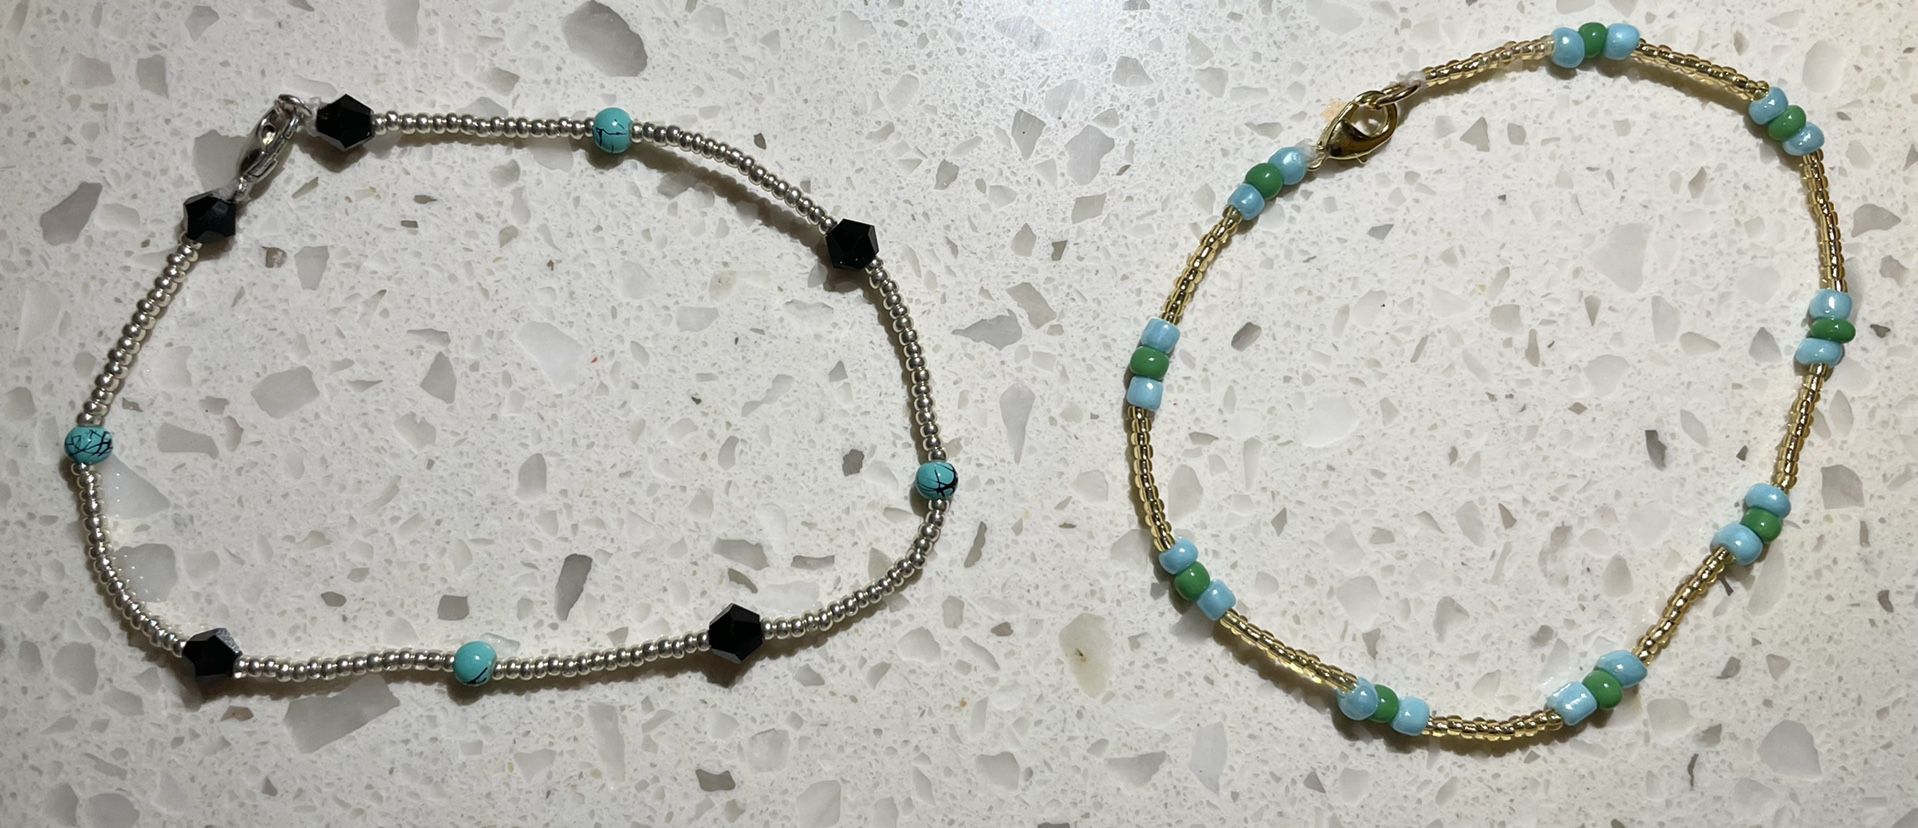 Glass Bead Jewelry